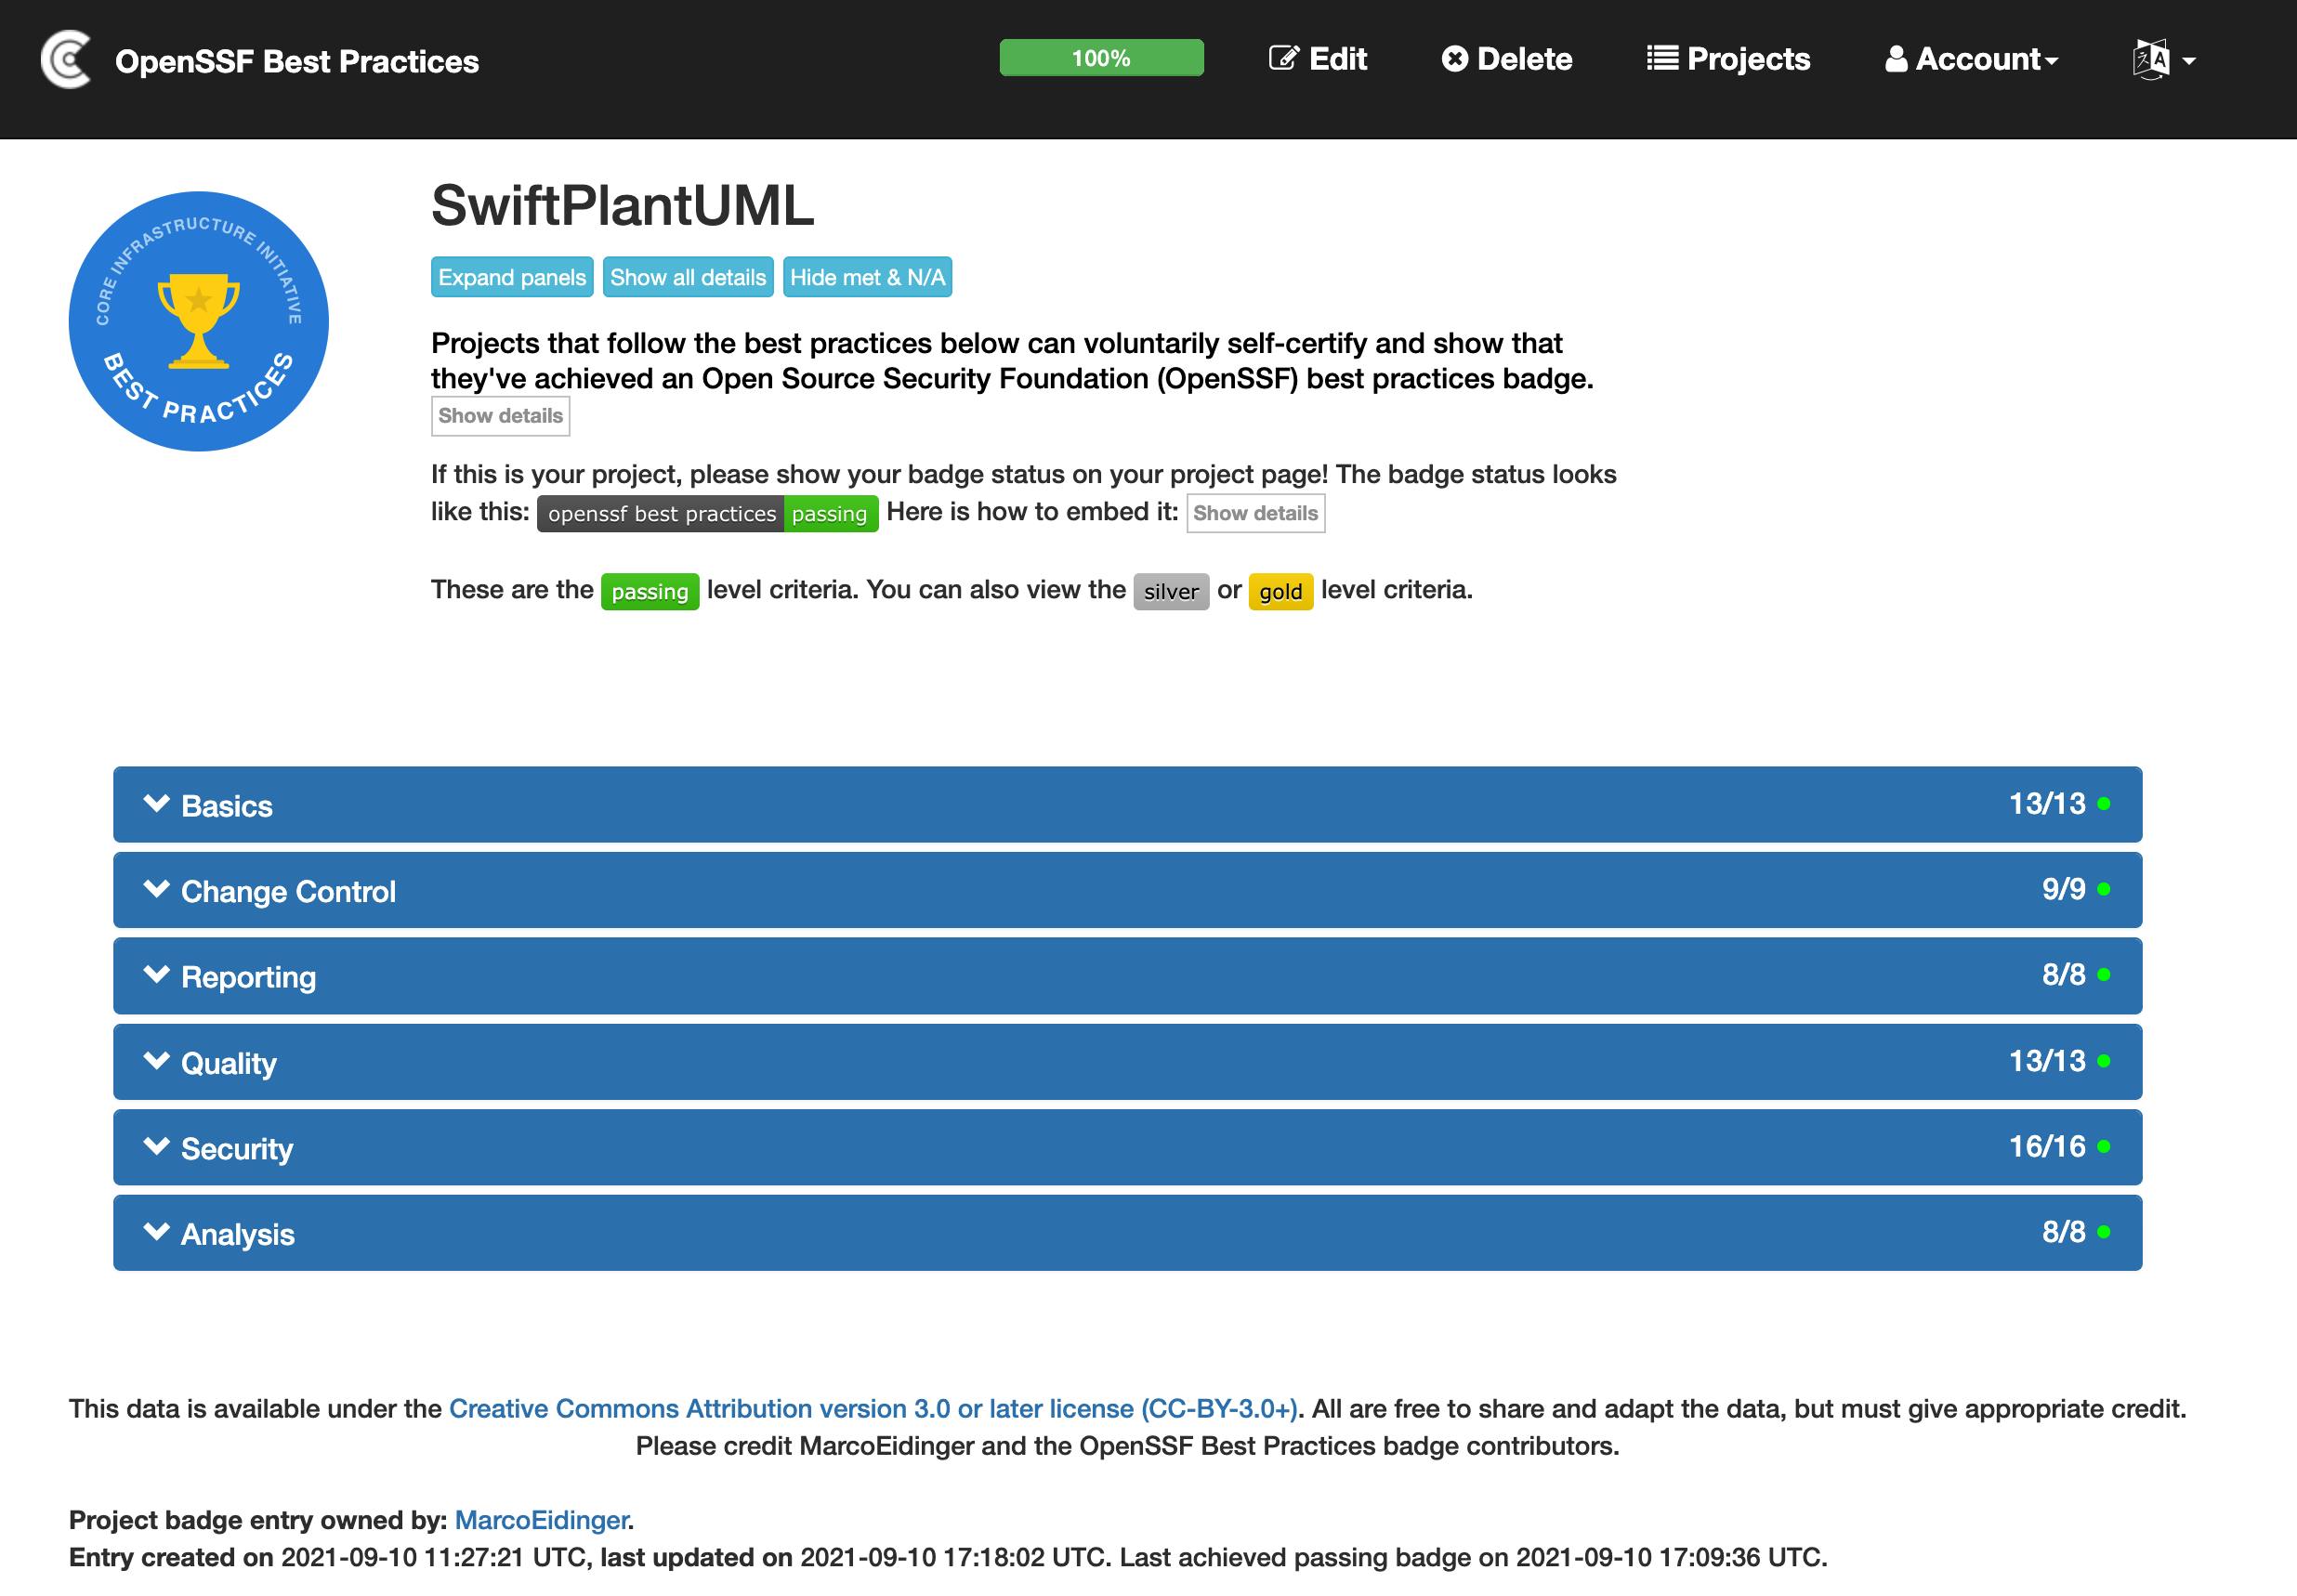 SwiftPlantUML project status with regards to OpenSSF Best Practices Badge